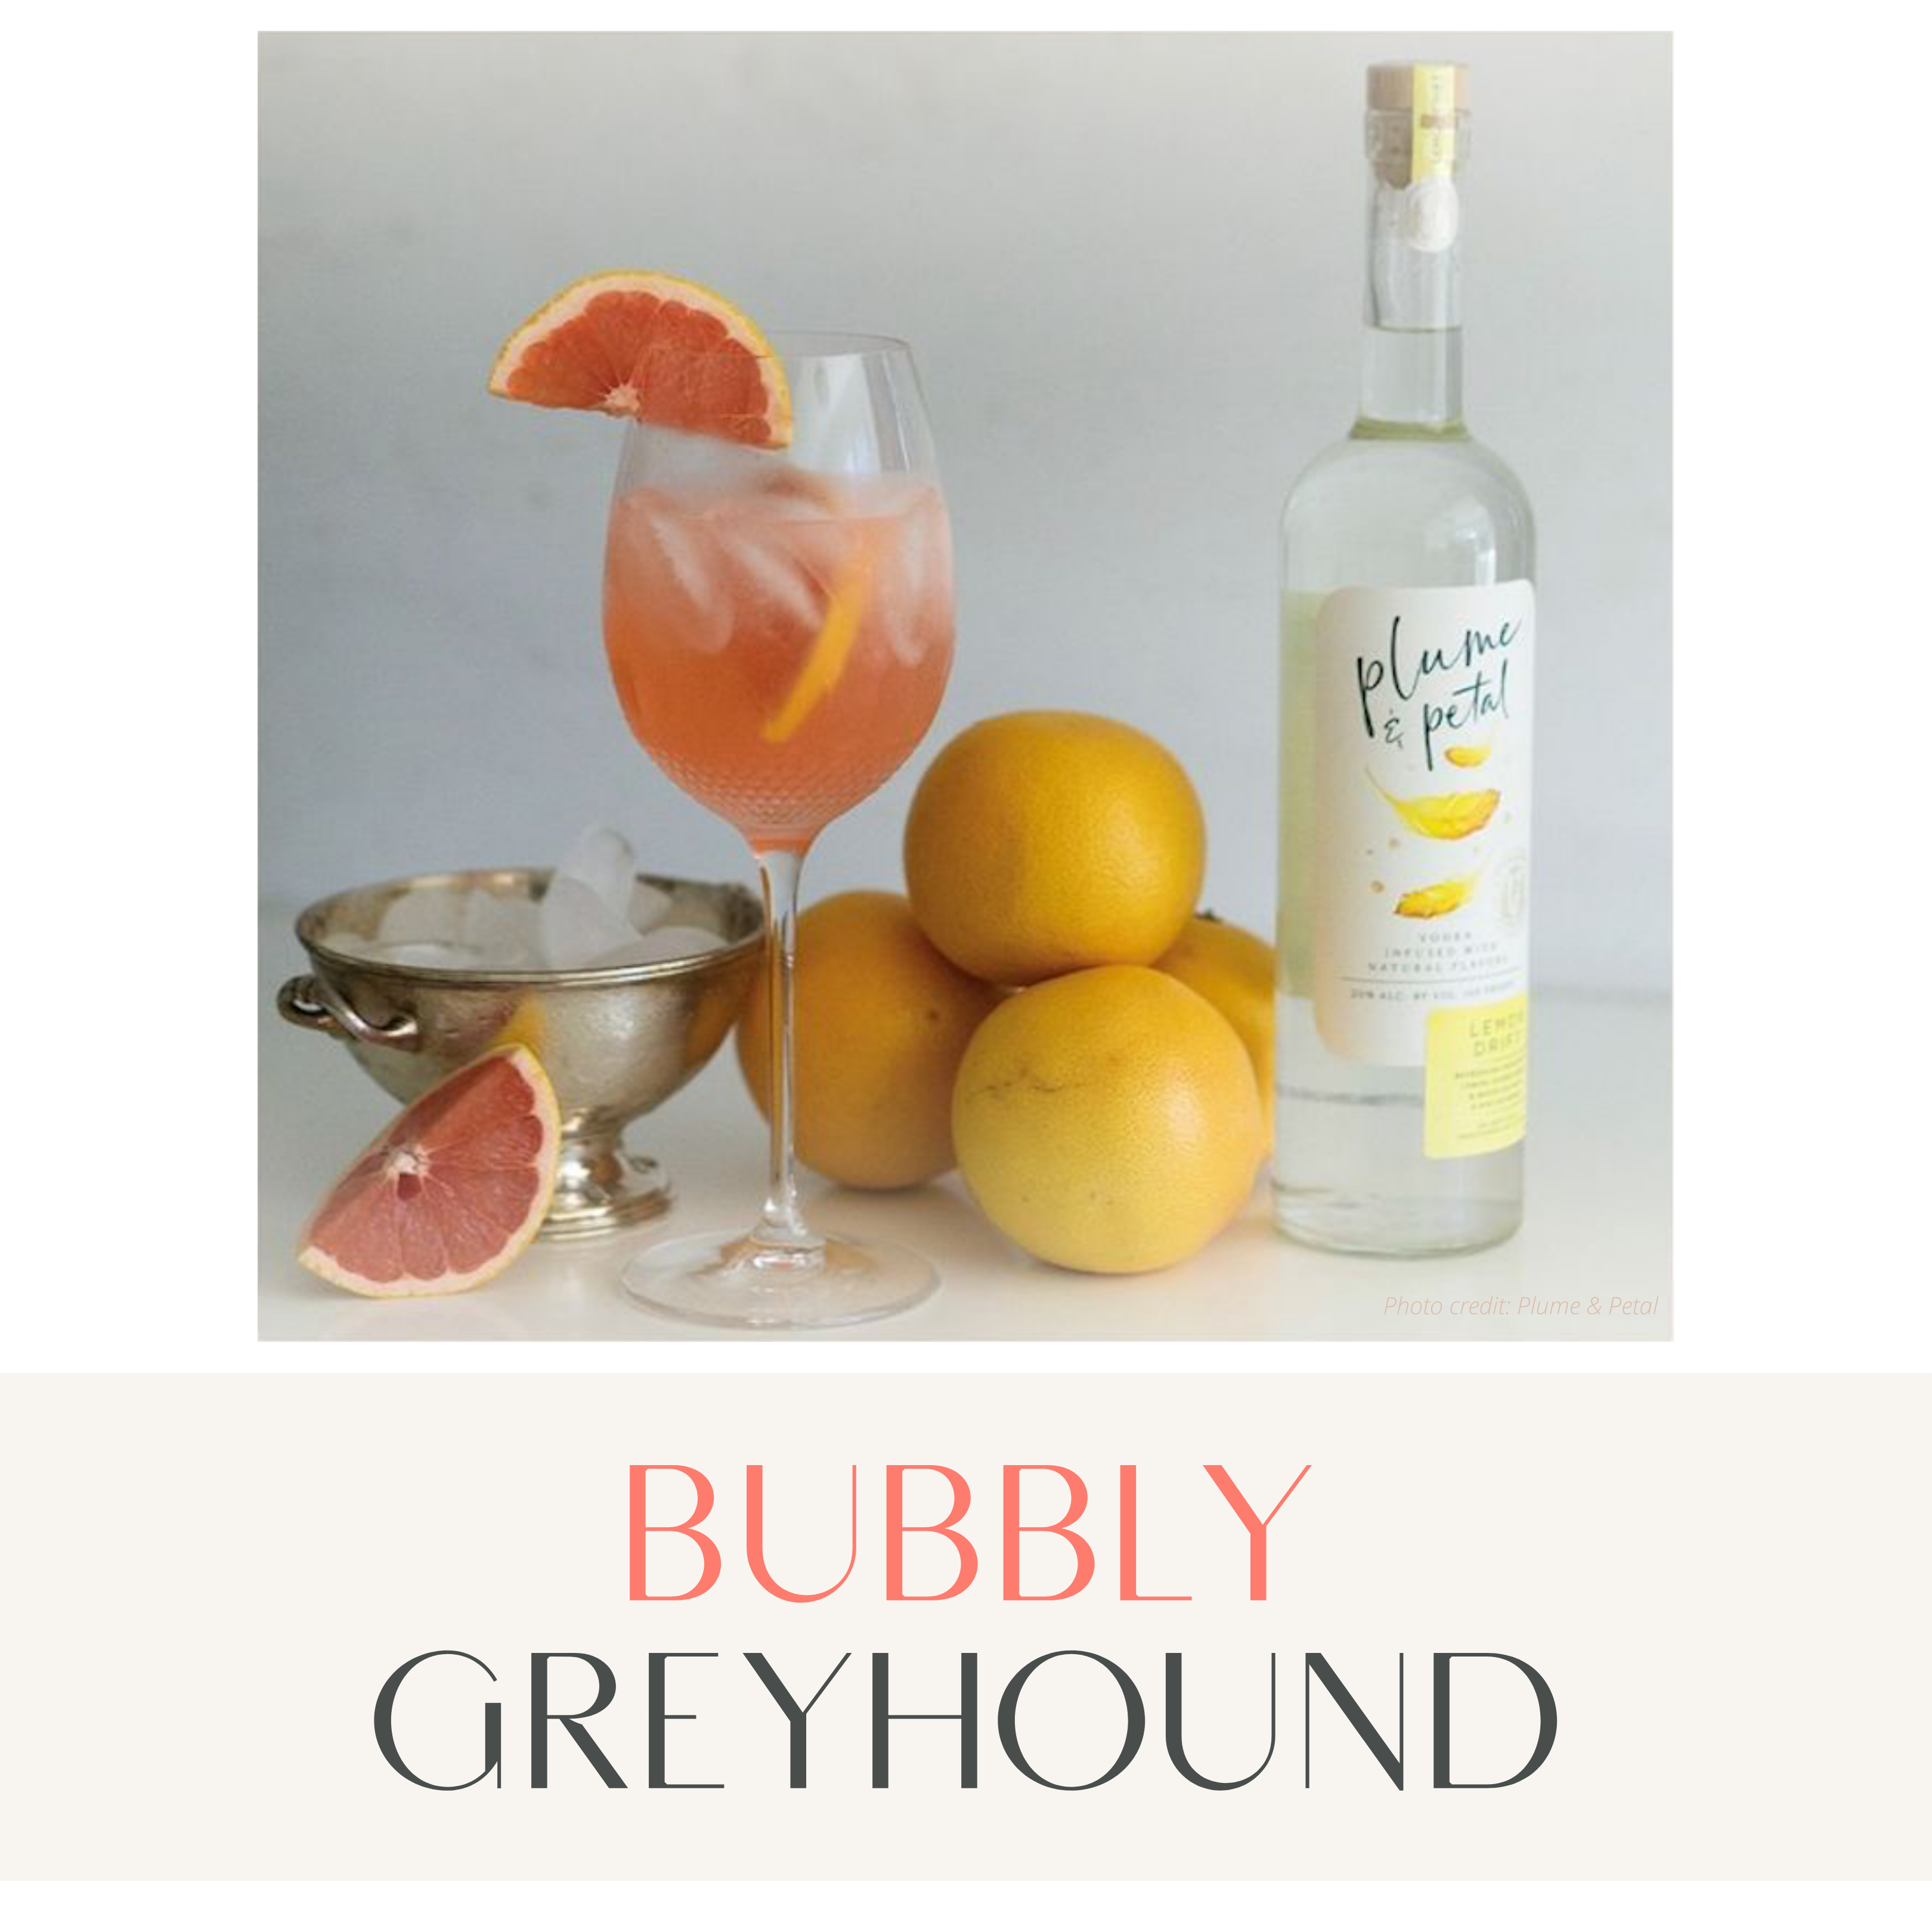 Bubbly Greyhound